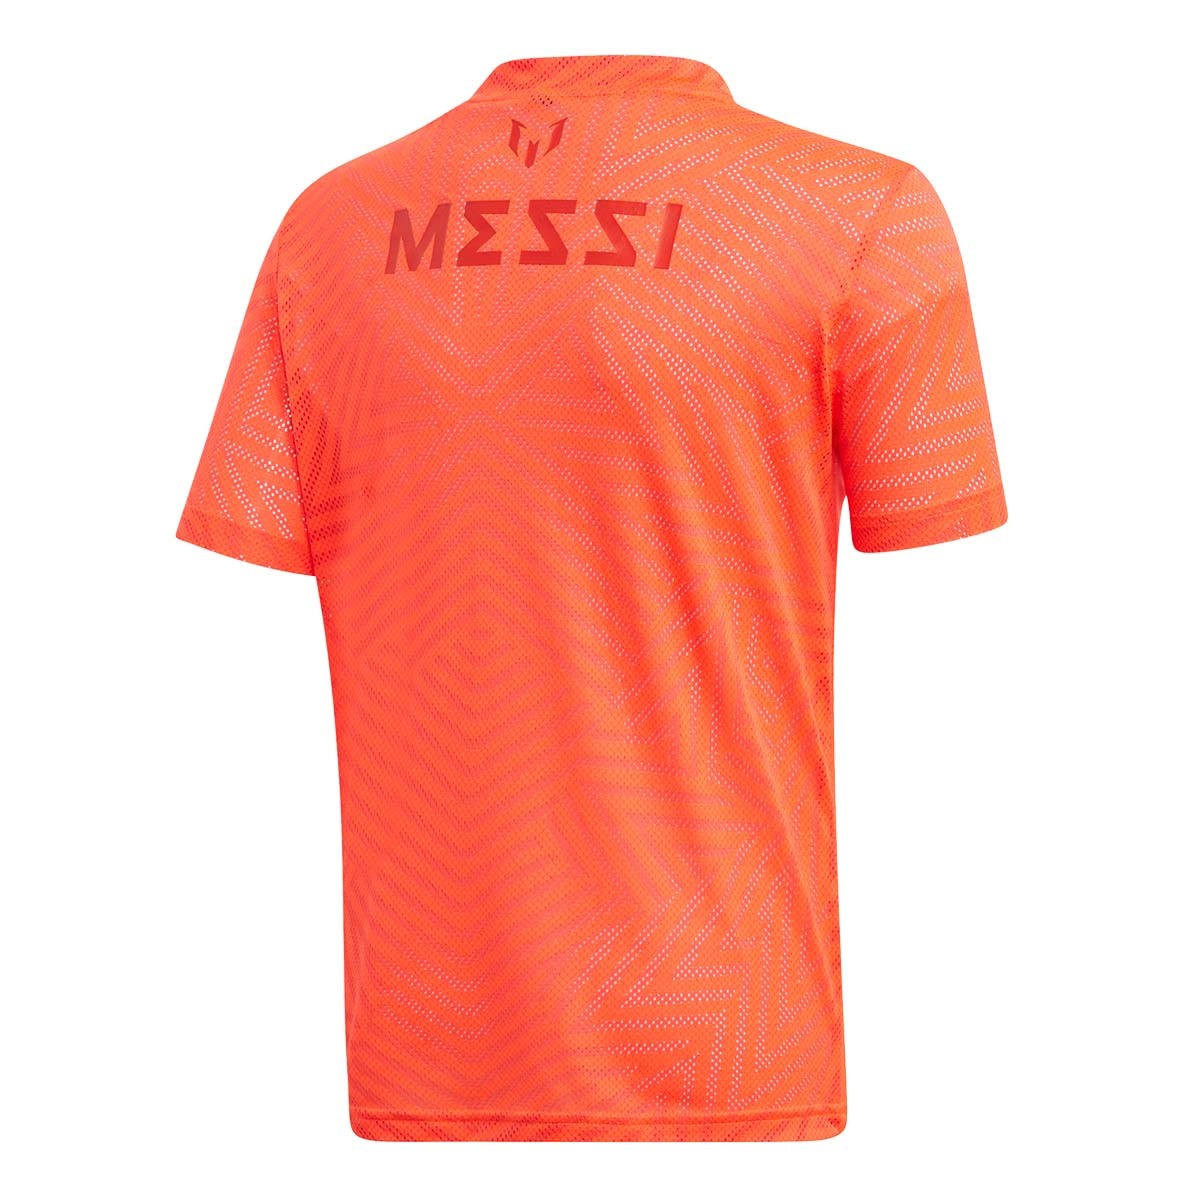 Camiseta adidas Messi Icon Niño Solar red - Tienda de fútbol Fútbol Emotion